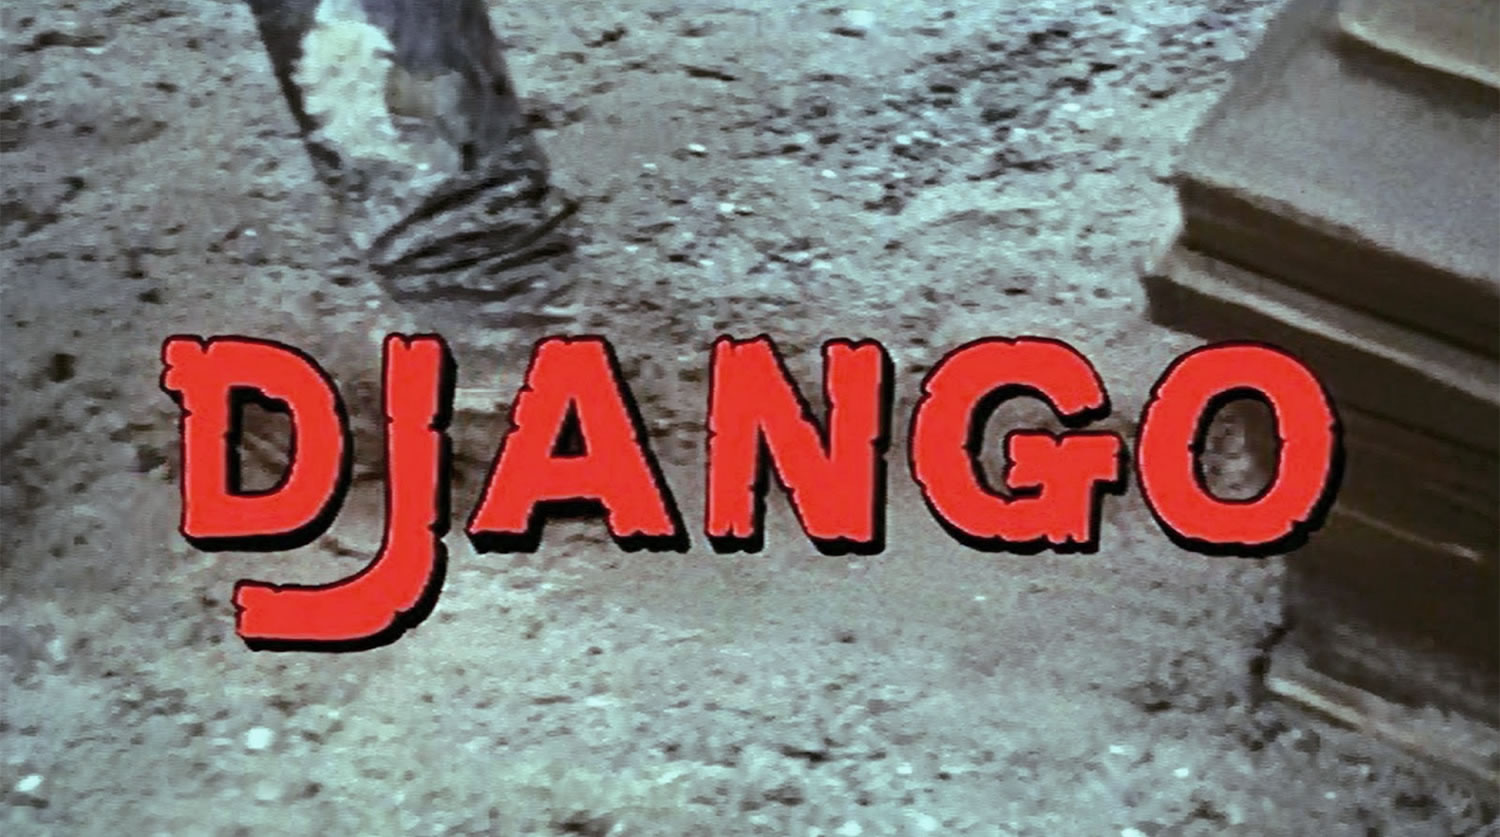 django, original movie, 1966 Italian Spaghetti Western , same font in tarantino's movie